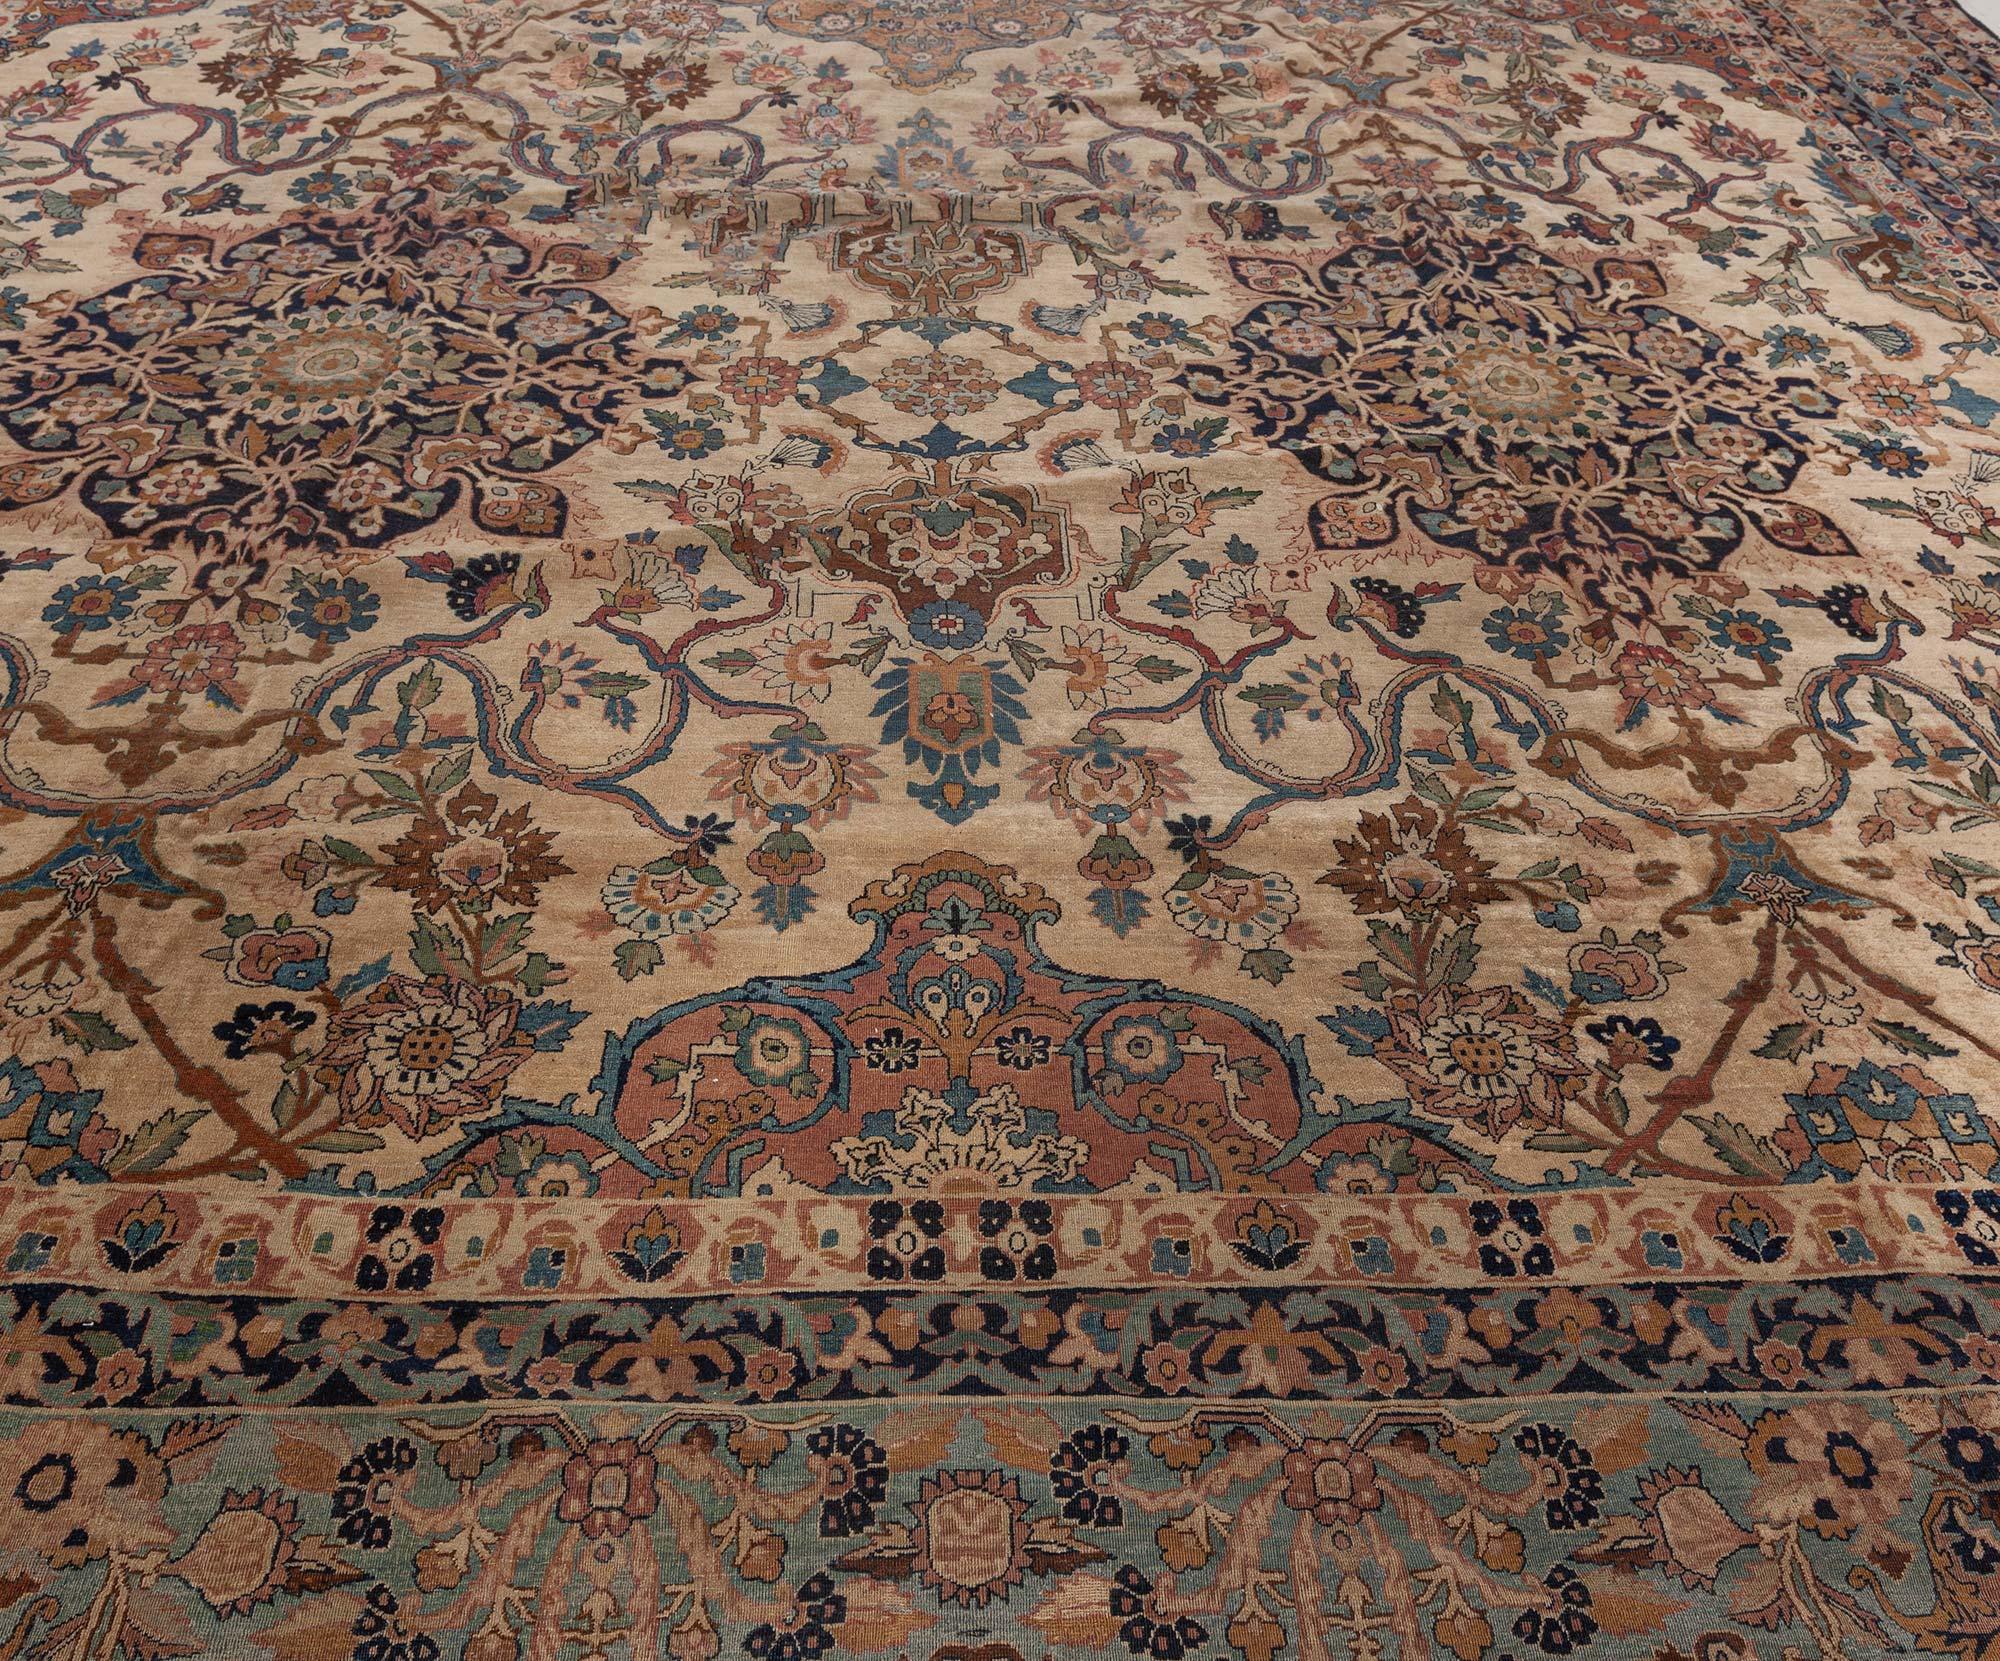 Authentic Vintage Persian Kirman floral handmade wool rug
Size: 12'1